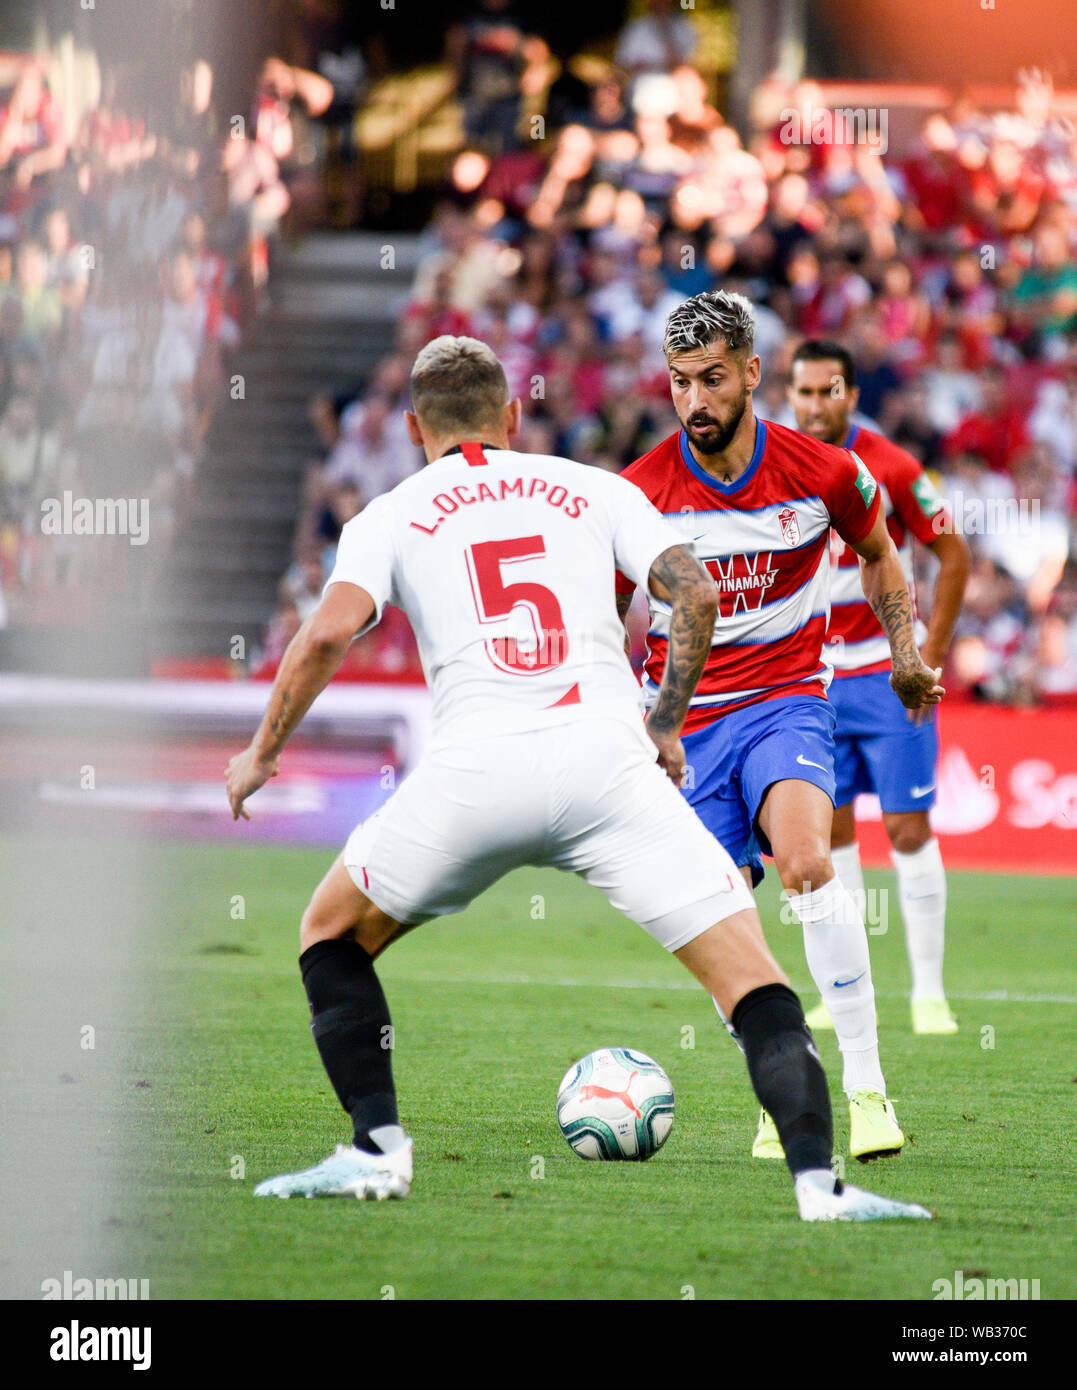 Granada CF Player, Alvaro Vadillo (l), die in Aktion während der Liga Santander Match zwischen Granada CF und FC Sevilla. (Final Score: Granada CF 0:1 FC Sevilla) Stockfoto